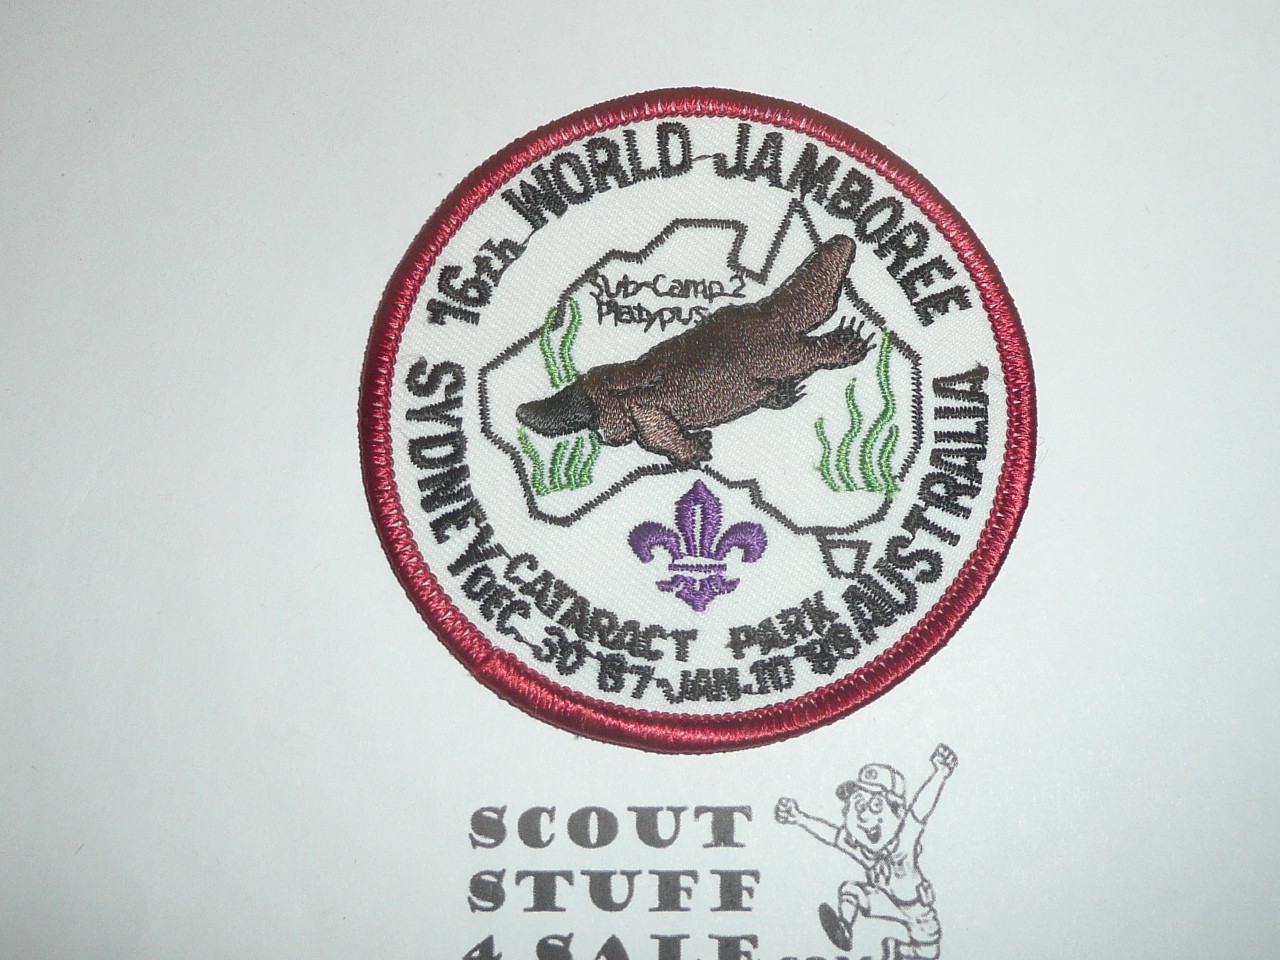 1987-1988 Boy Scout World Jamboree Subcamp 2 Patch